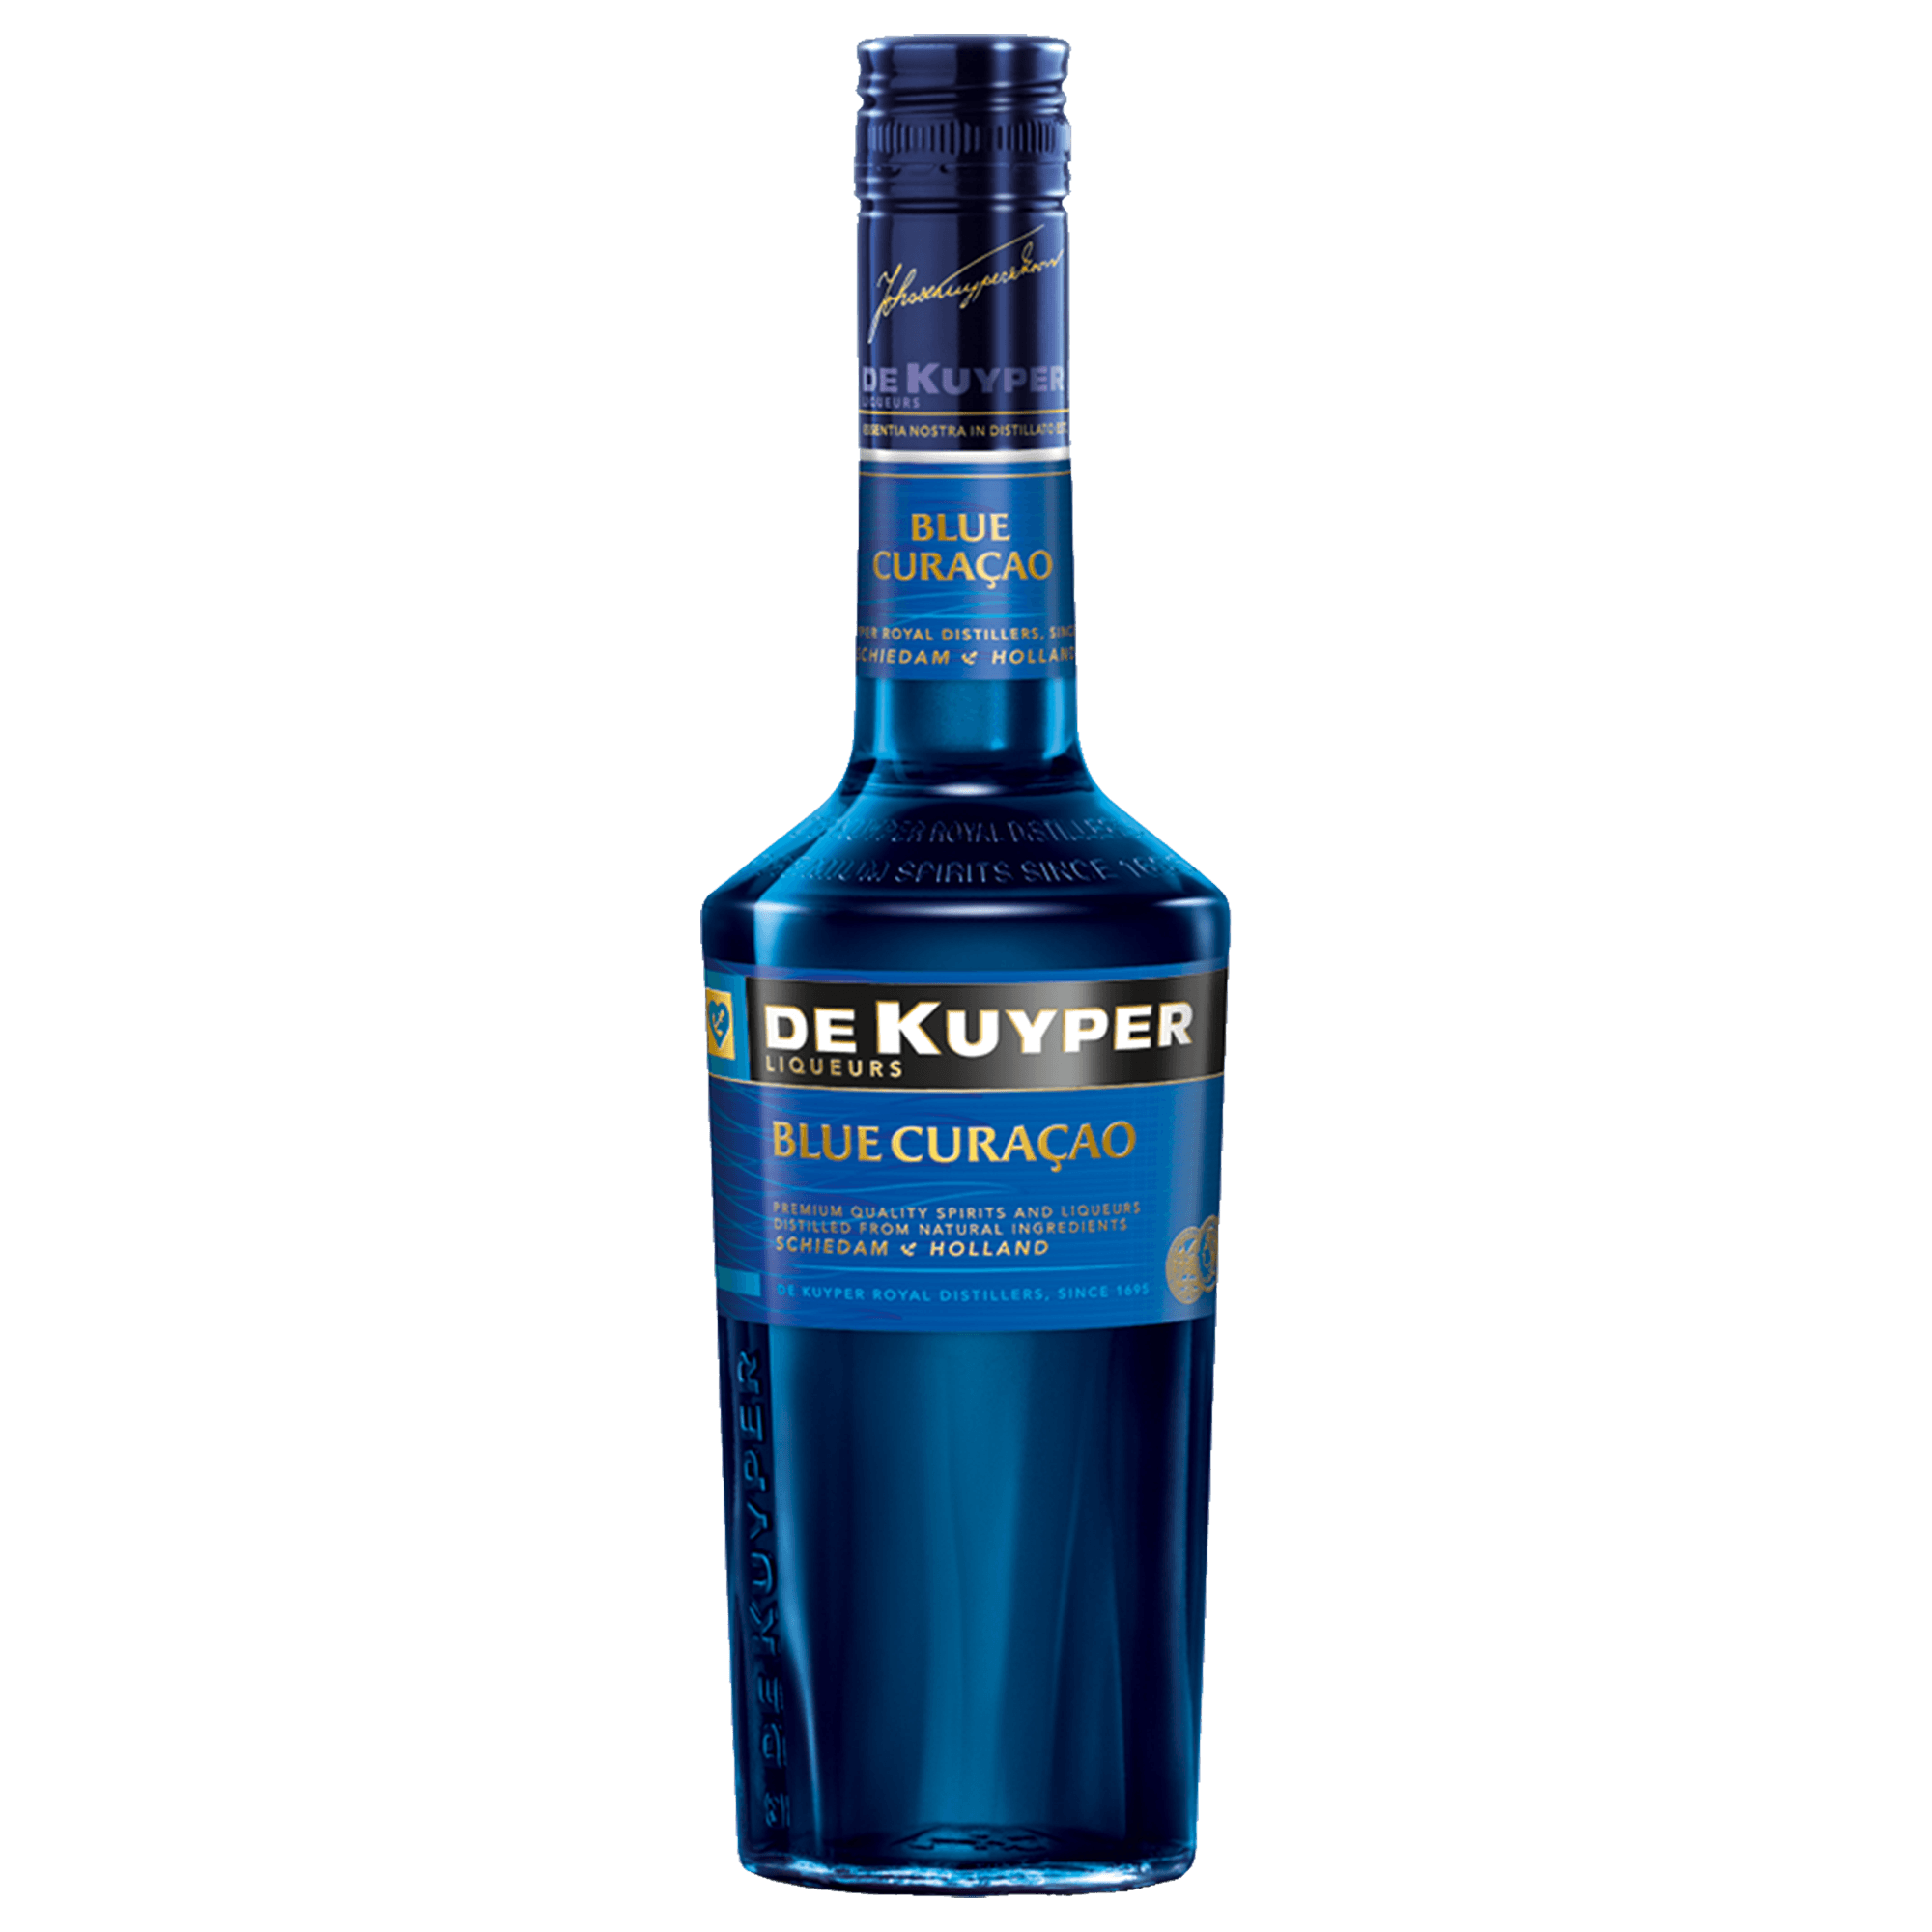 Метро ликер. Ликер de Kuyper, Blue Curacao, 0.7 л. Ликер де Кайпер голубой Кюрасао. Curacao Blue de Kuyper 0.7. Синий ликер Блю Кюрасао.